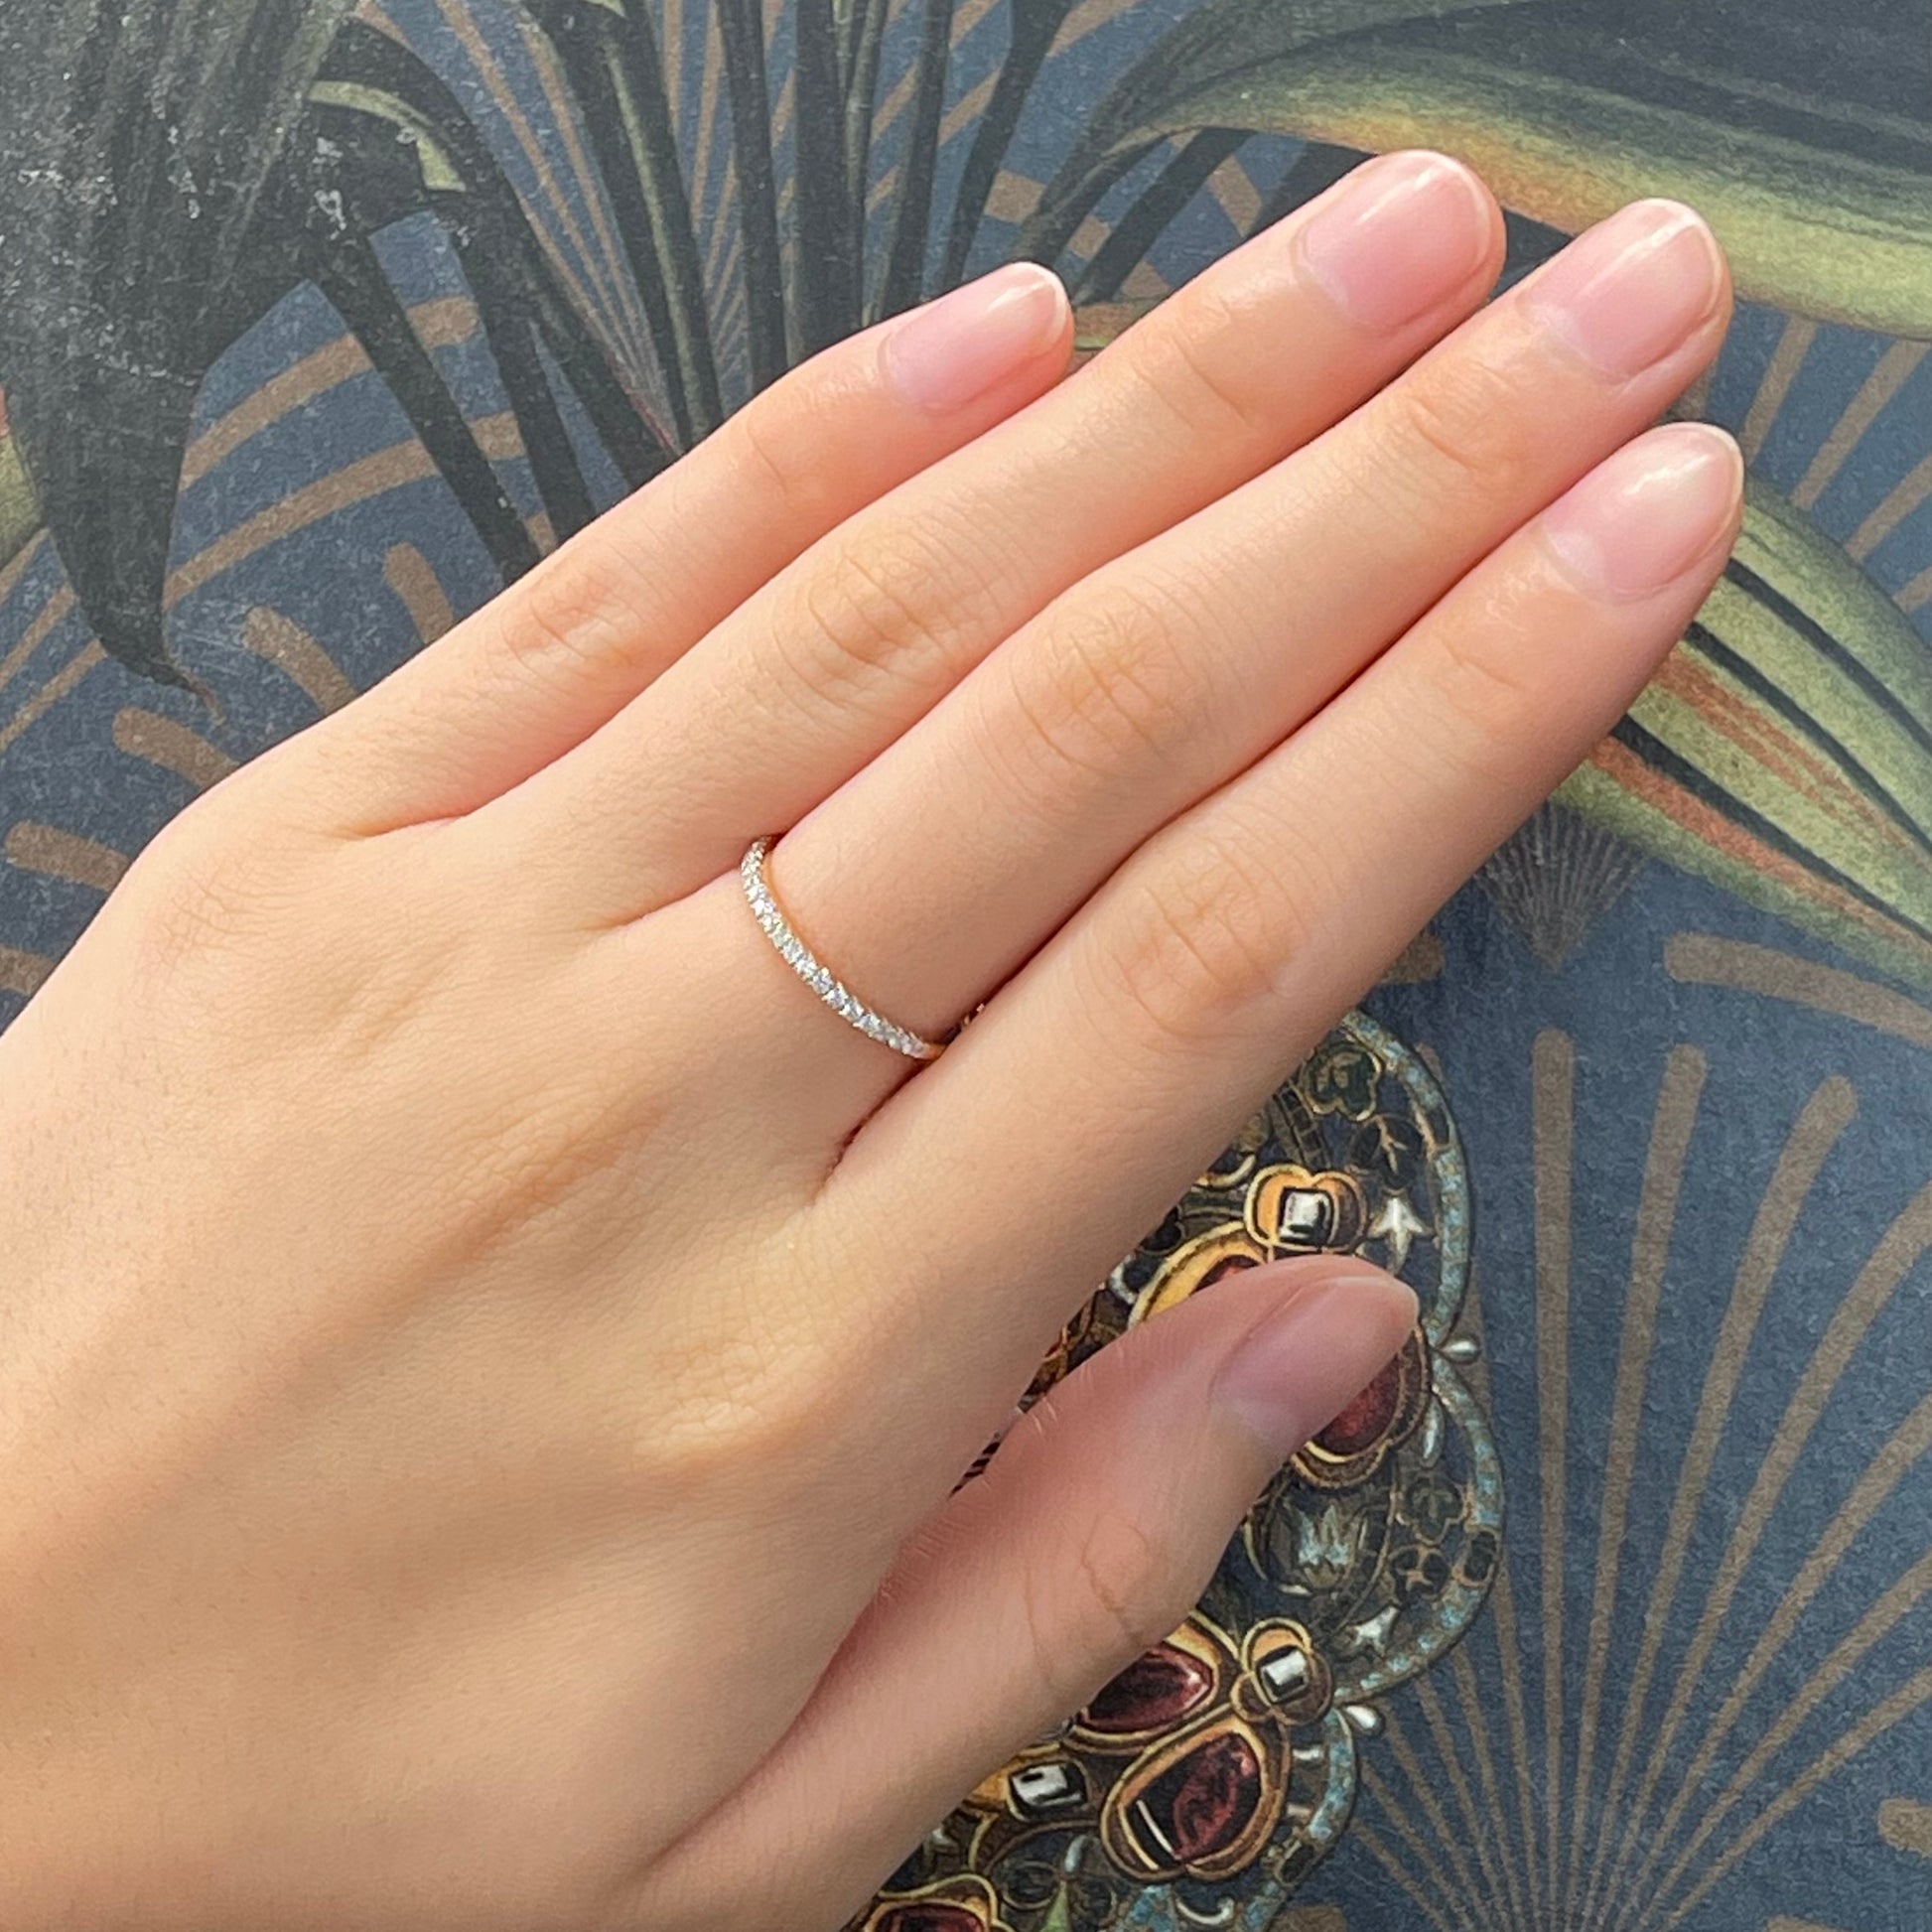   18k玫瑰金鑽石戒指在中指上 18k Rose Gold Eternity Diamond Ring on middle finger